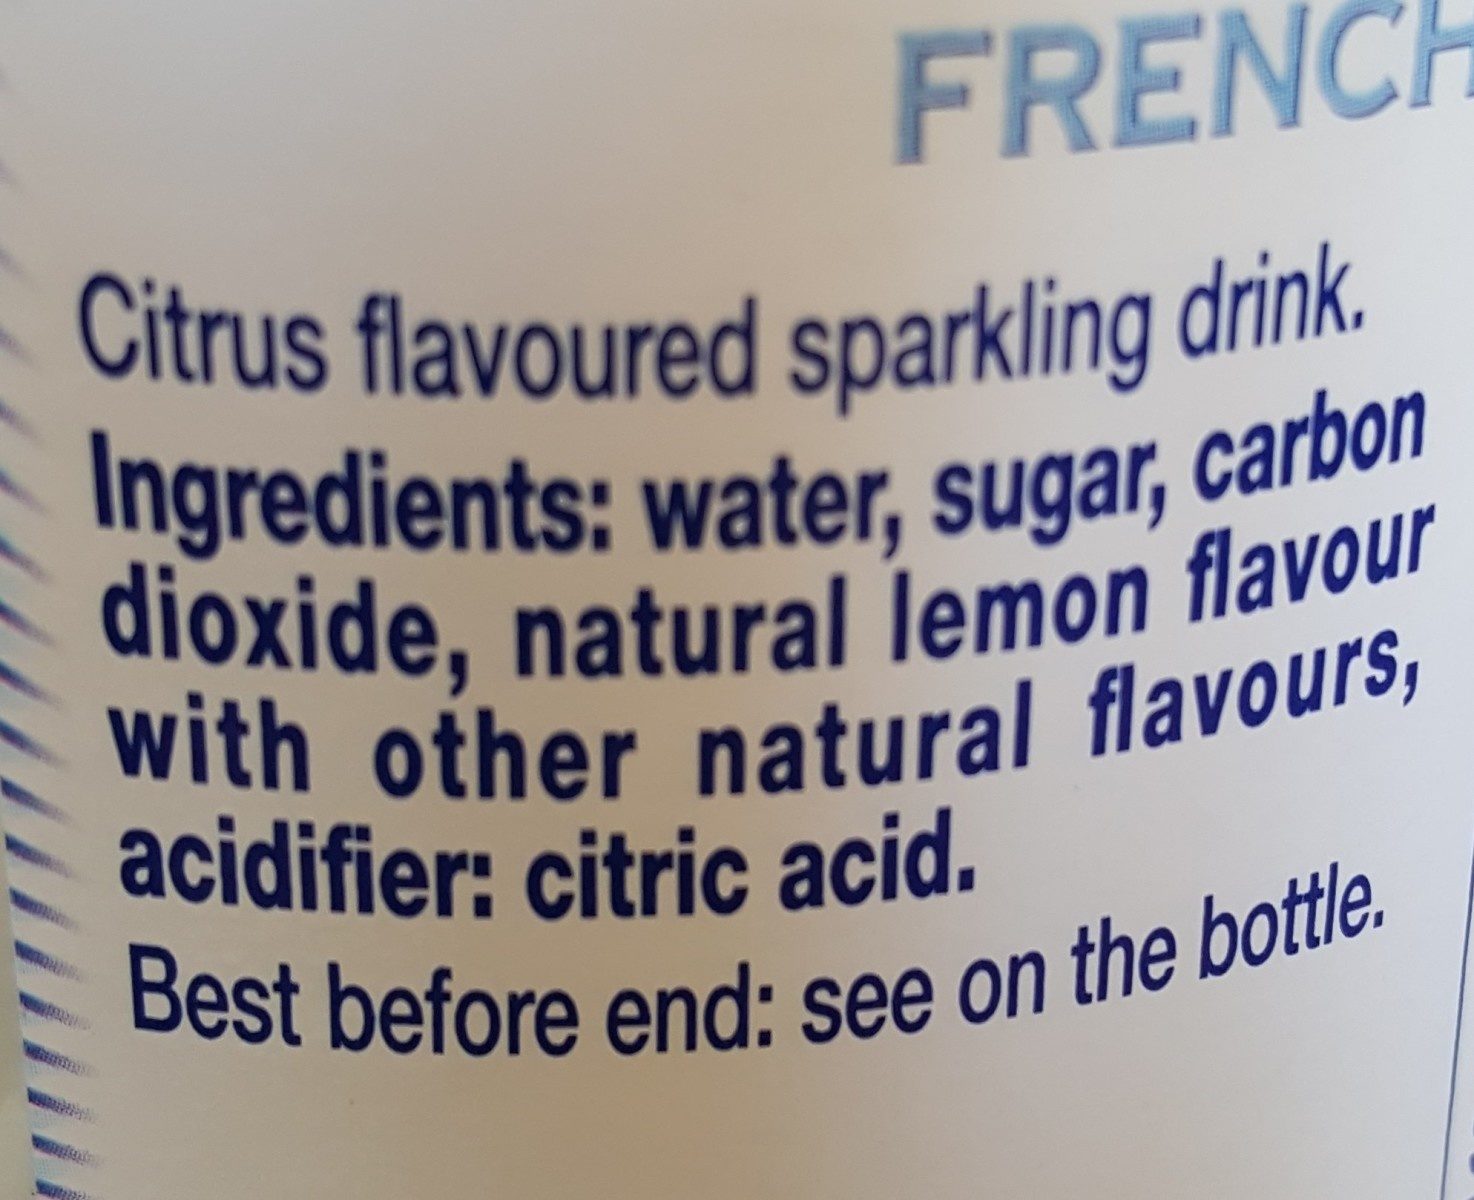 Limonade - Ingredients - fr